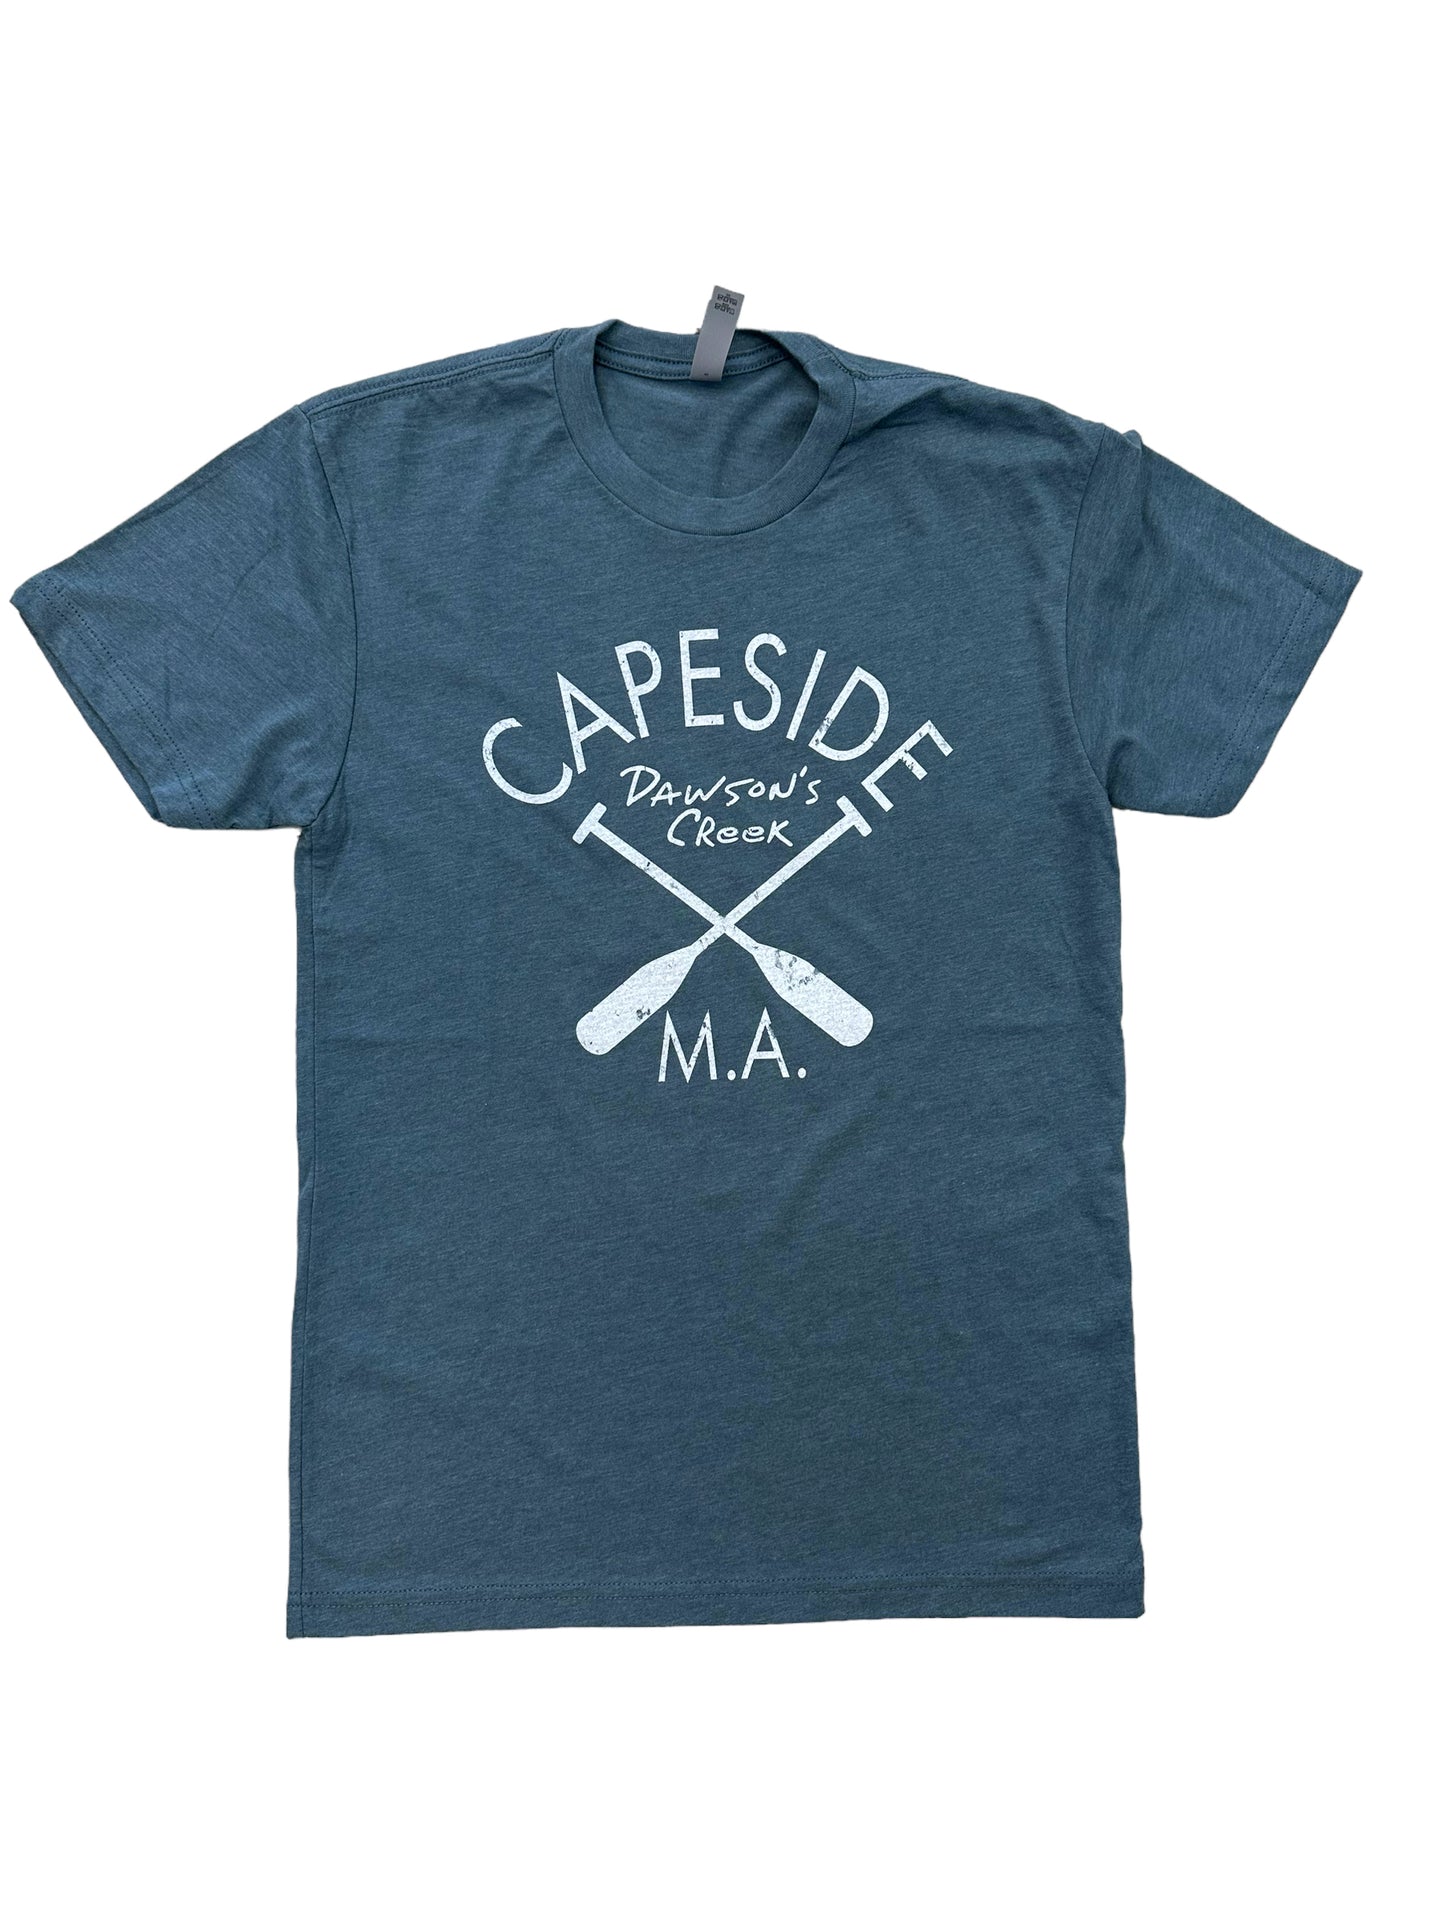 Capeside Dawson Creek - T Shirt - Indigo